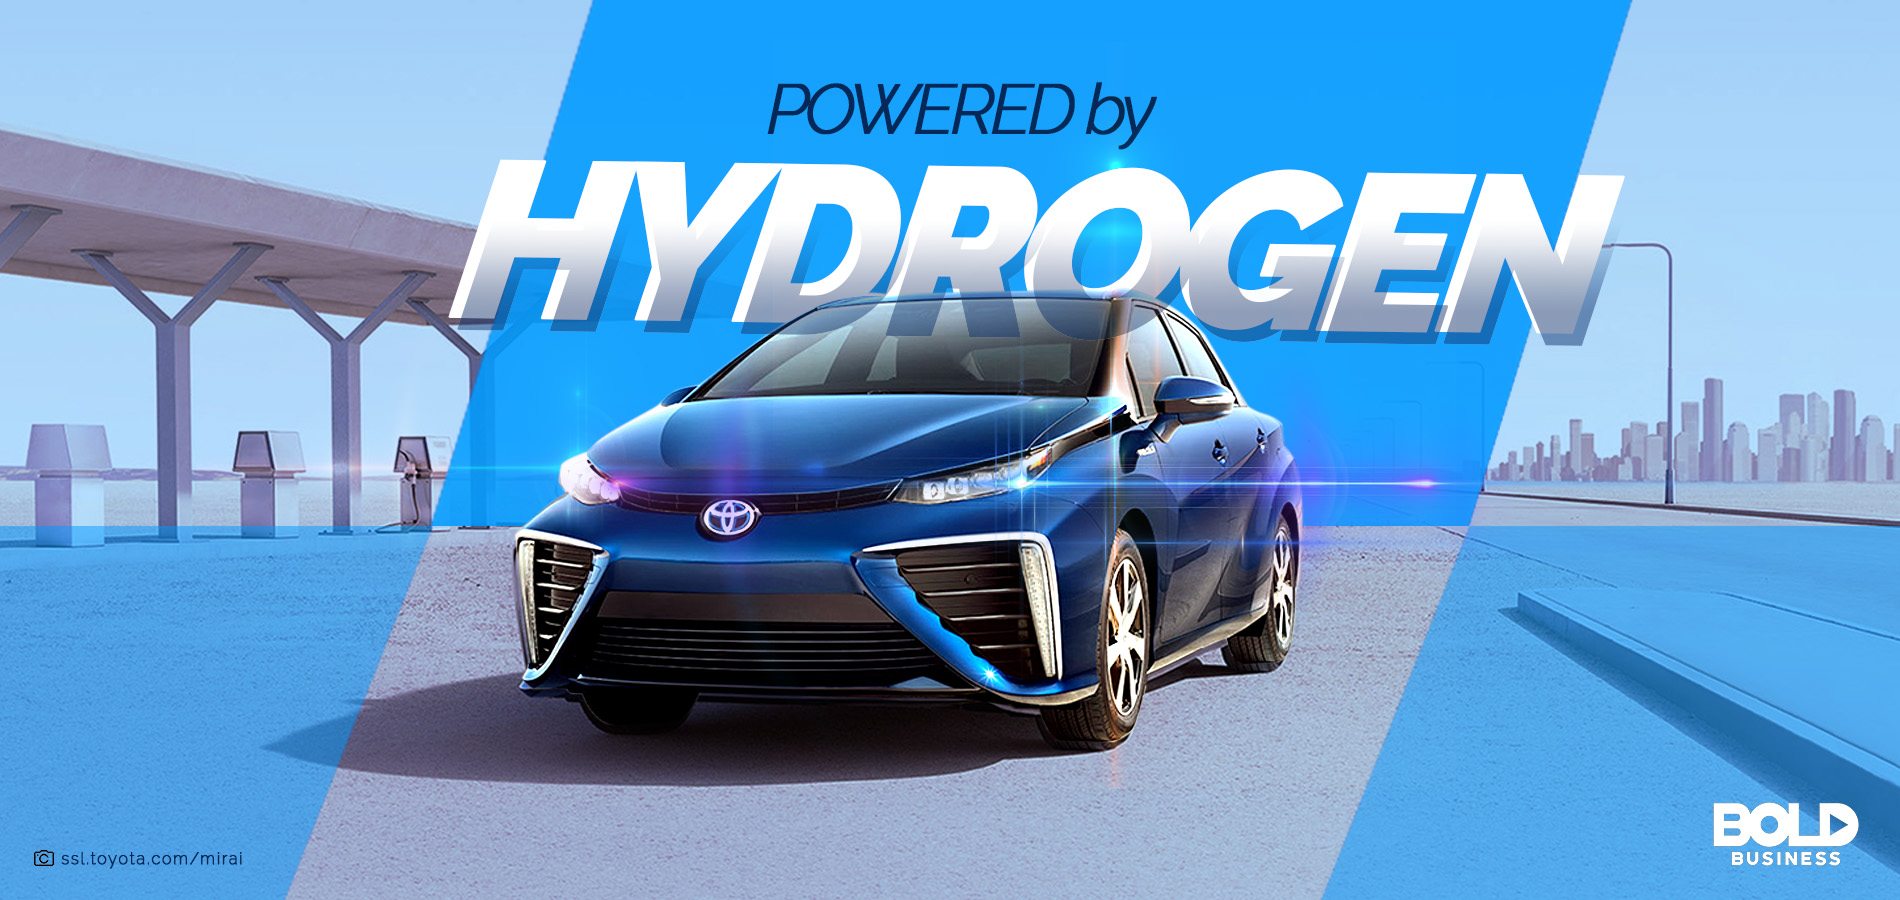 Toyota’s Mirai Hydrogen Powered Car Set to Expand Market